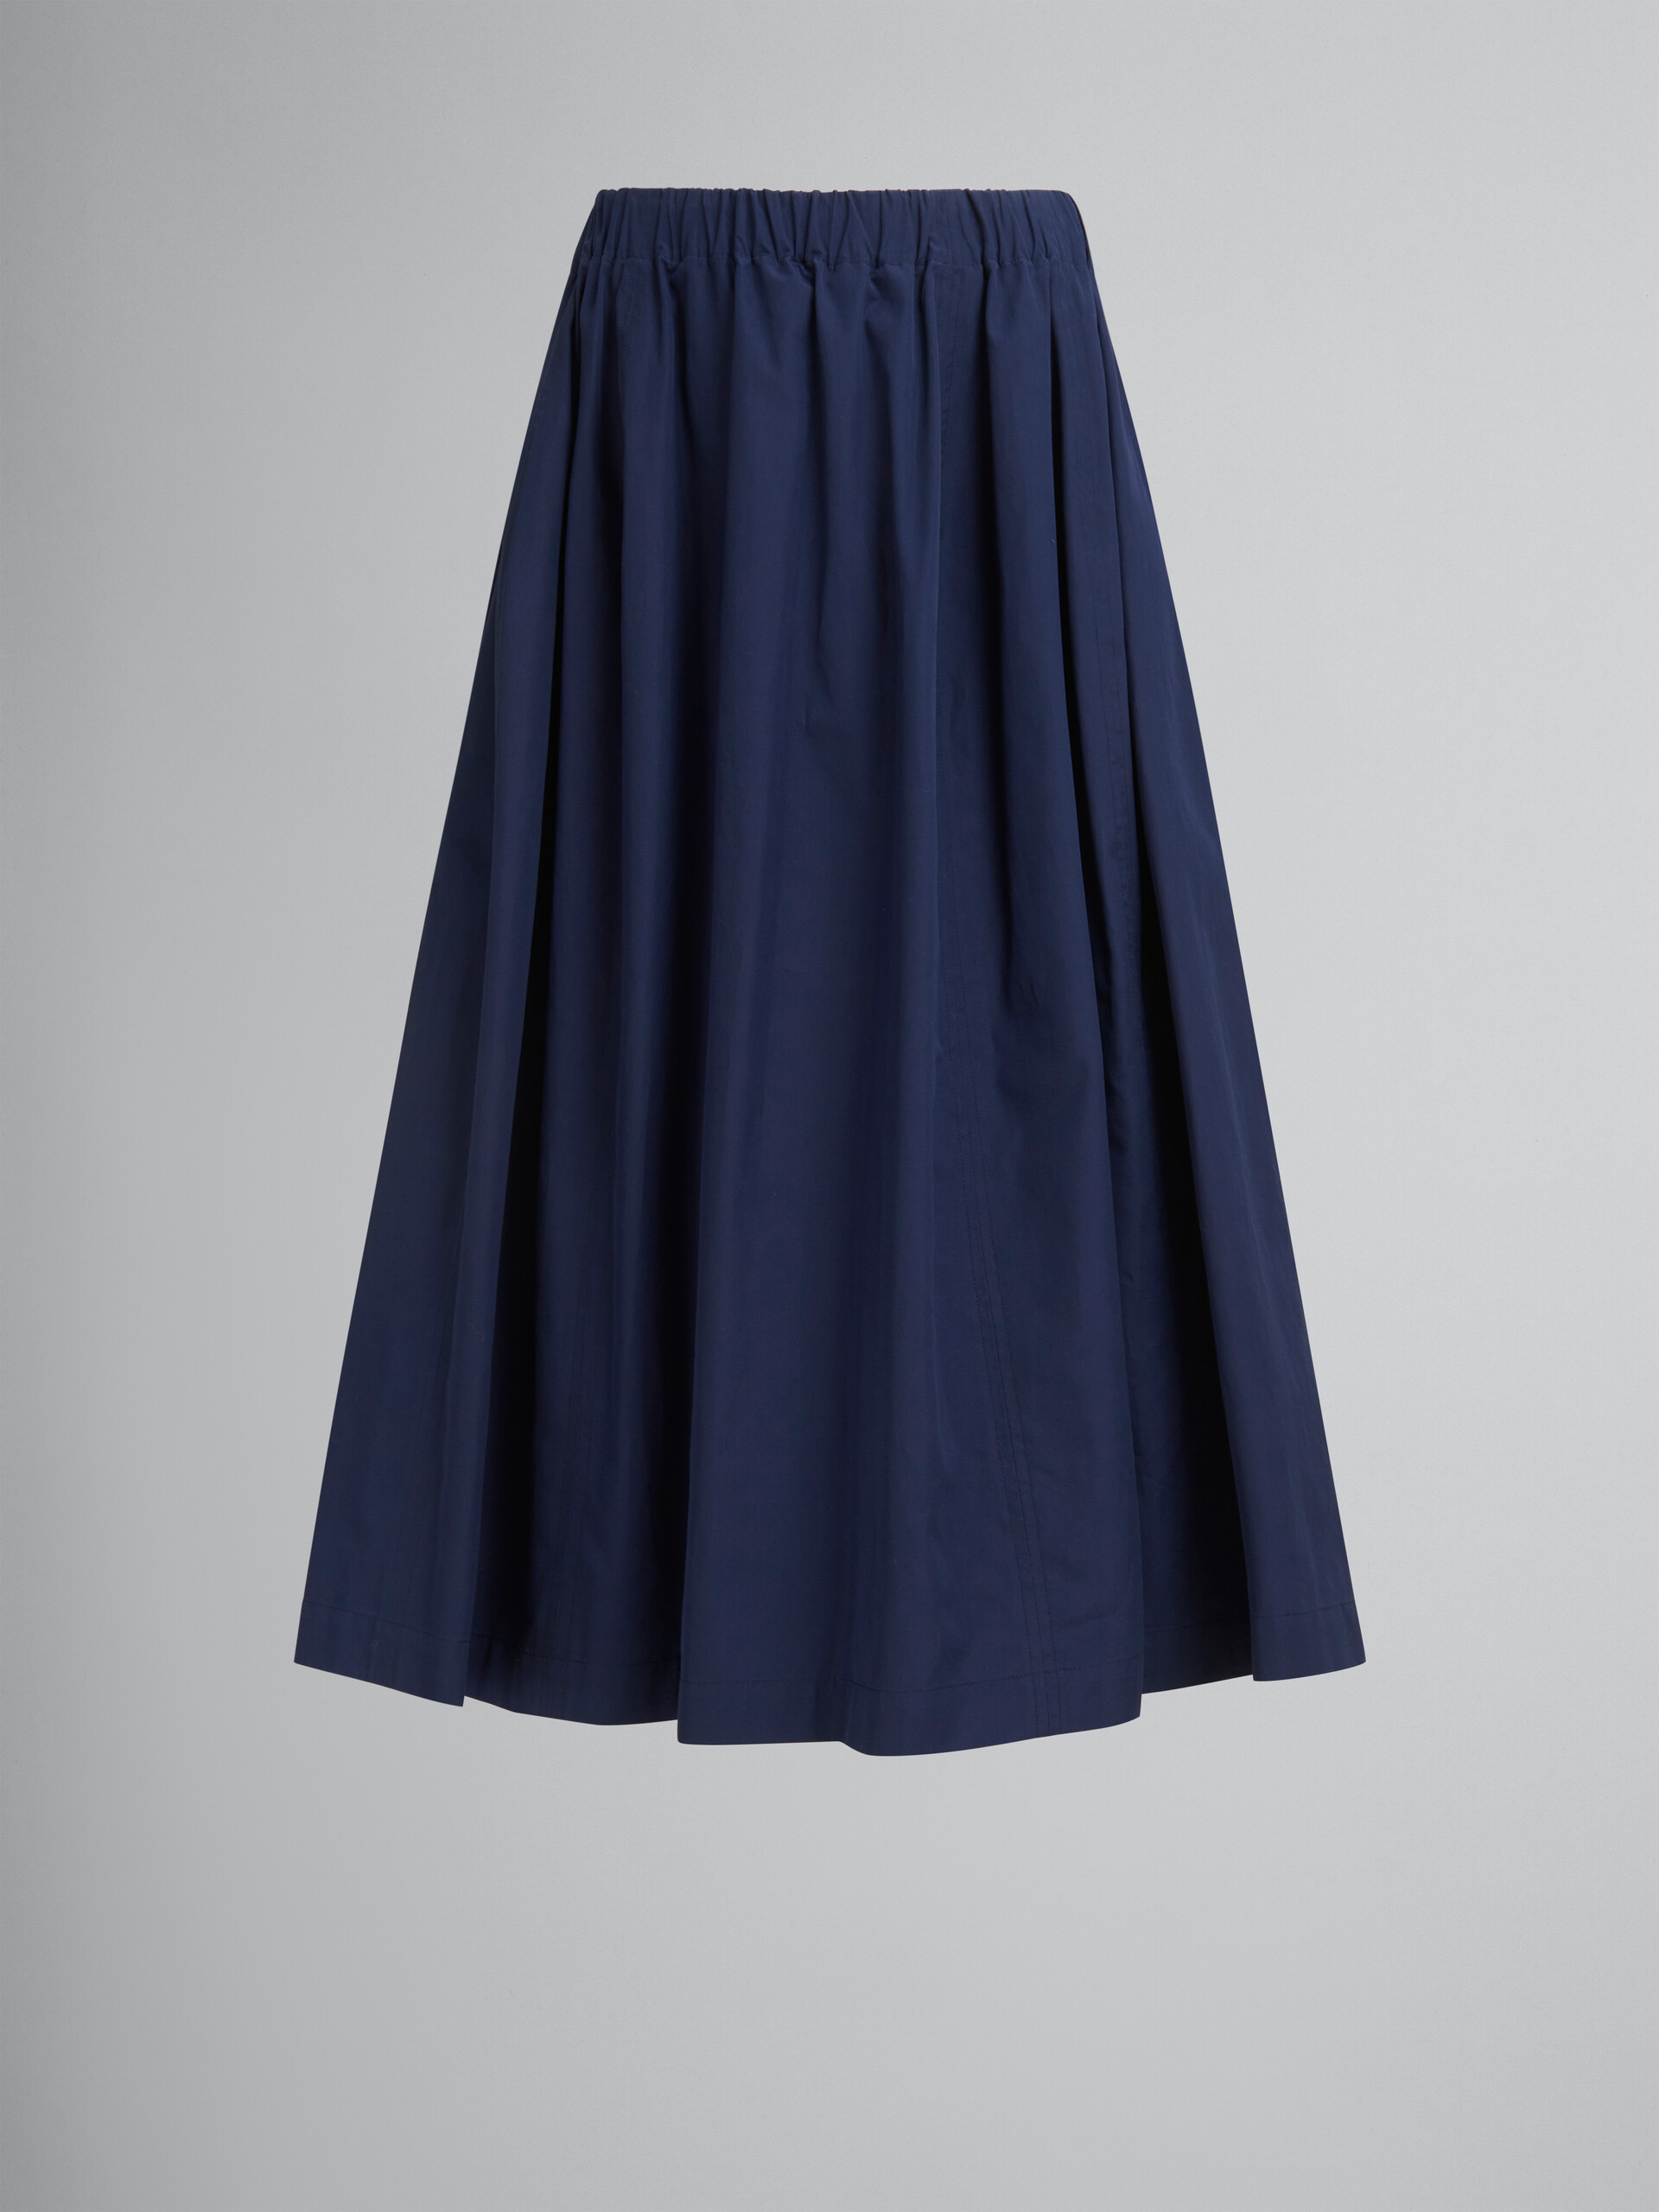 Blue organic poplin elasticated midi skirt - Skirts - Image 1